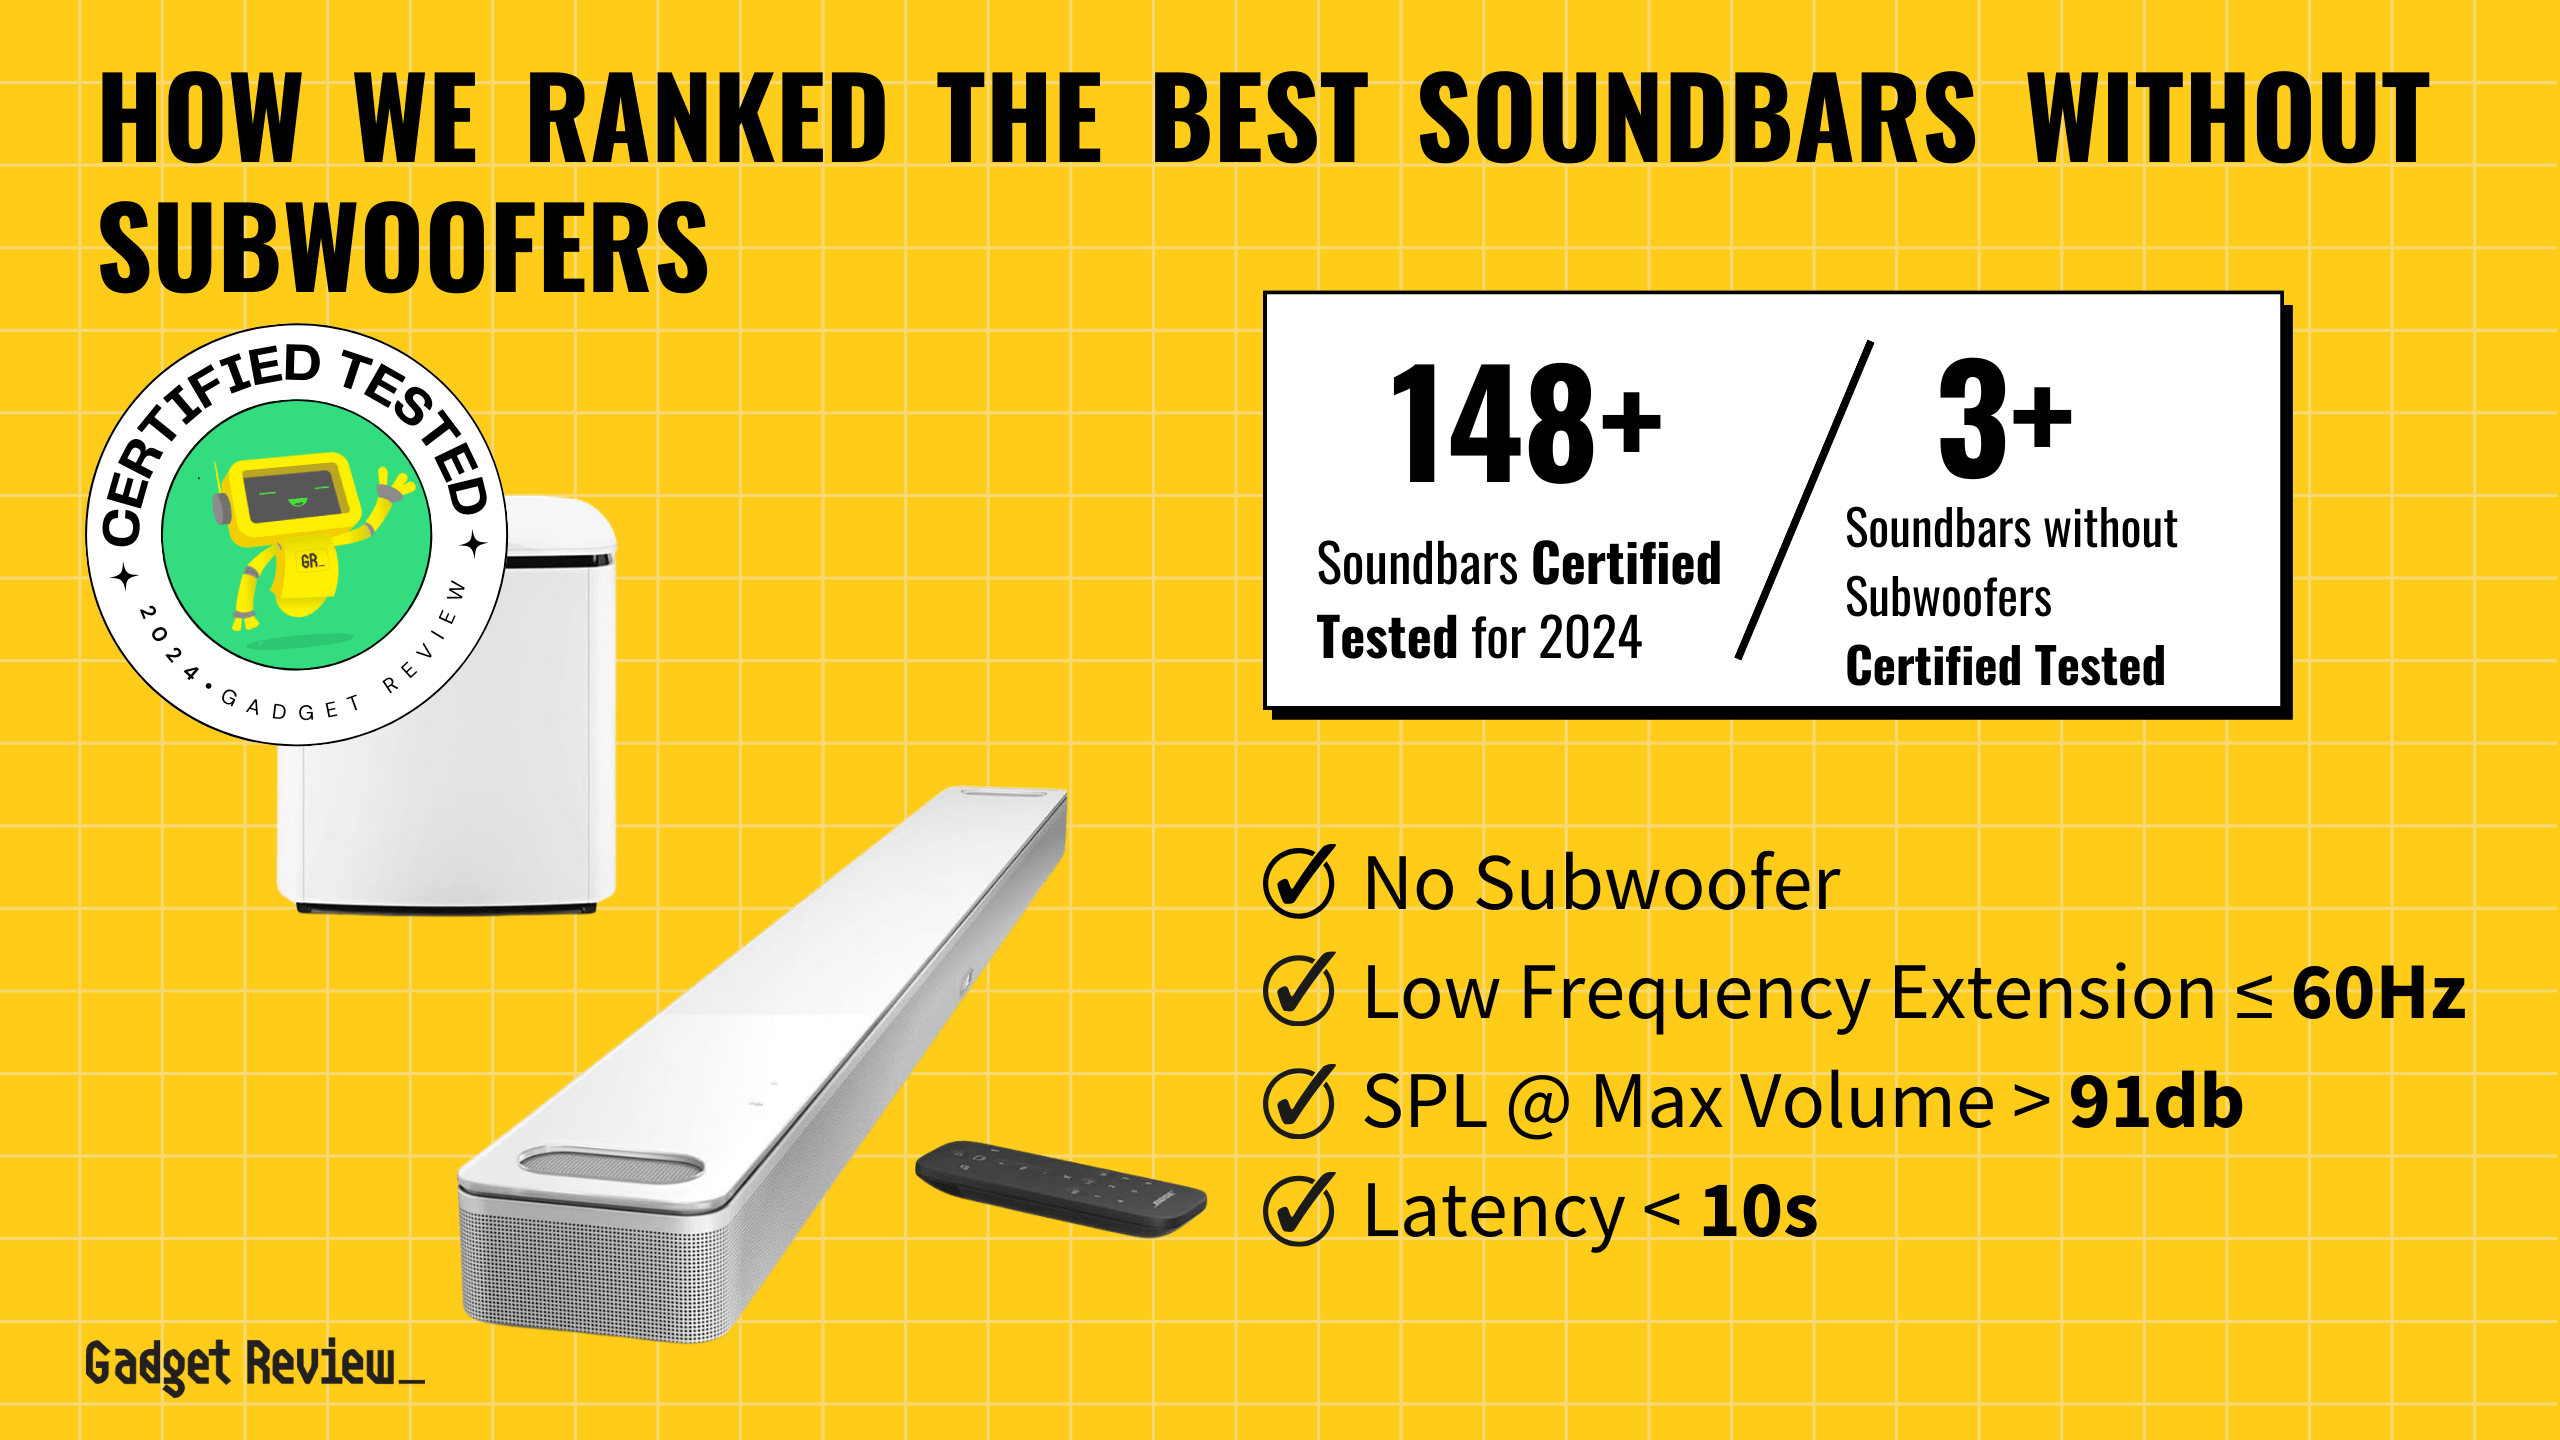 best soundbar without subwoofer guide that shows the top best soundbar model